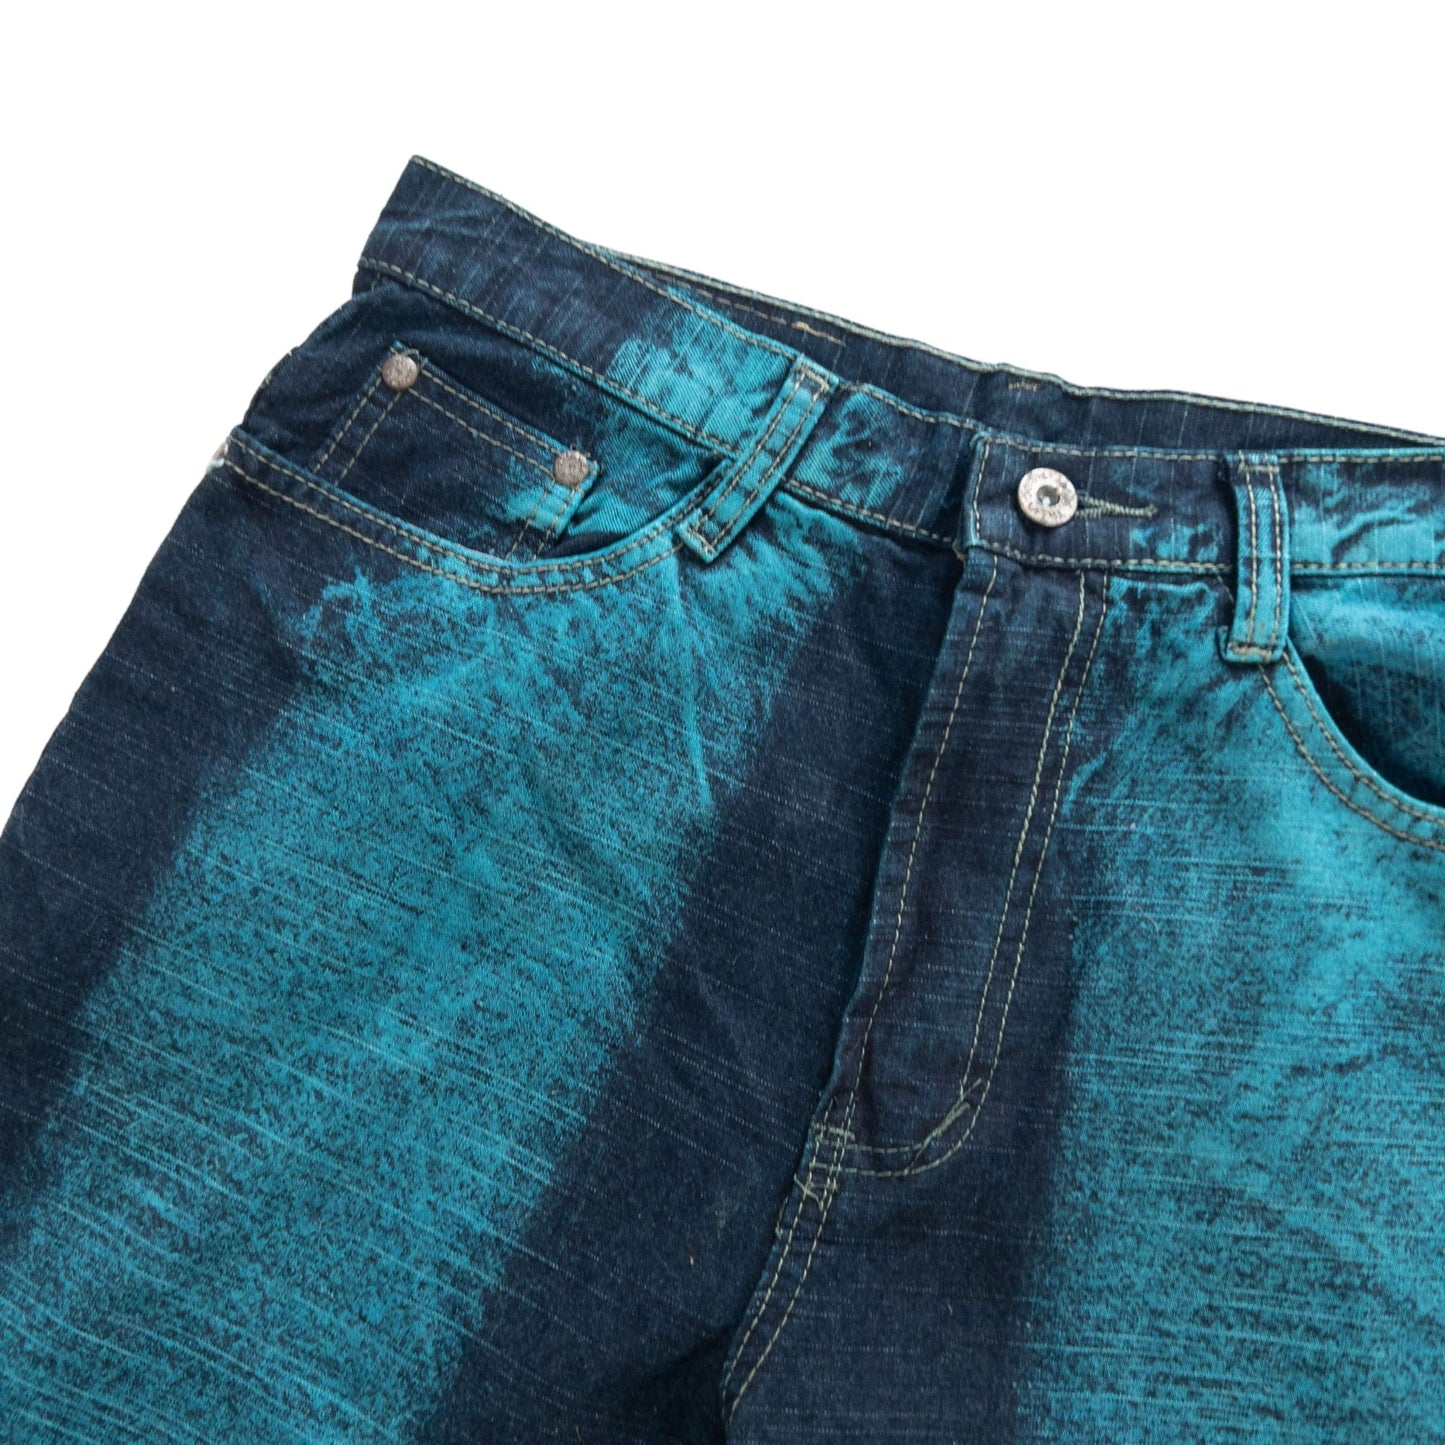 Vintage Anchor Blue Dyed Strip Denim Jeans Size W30